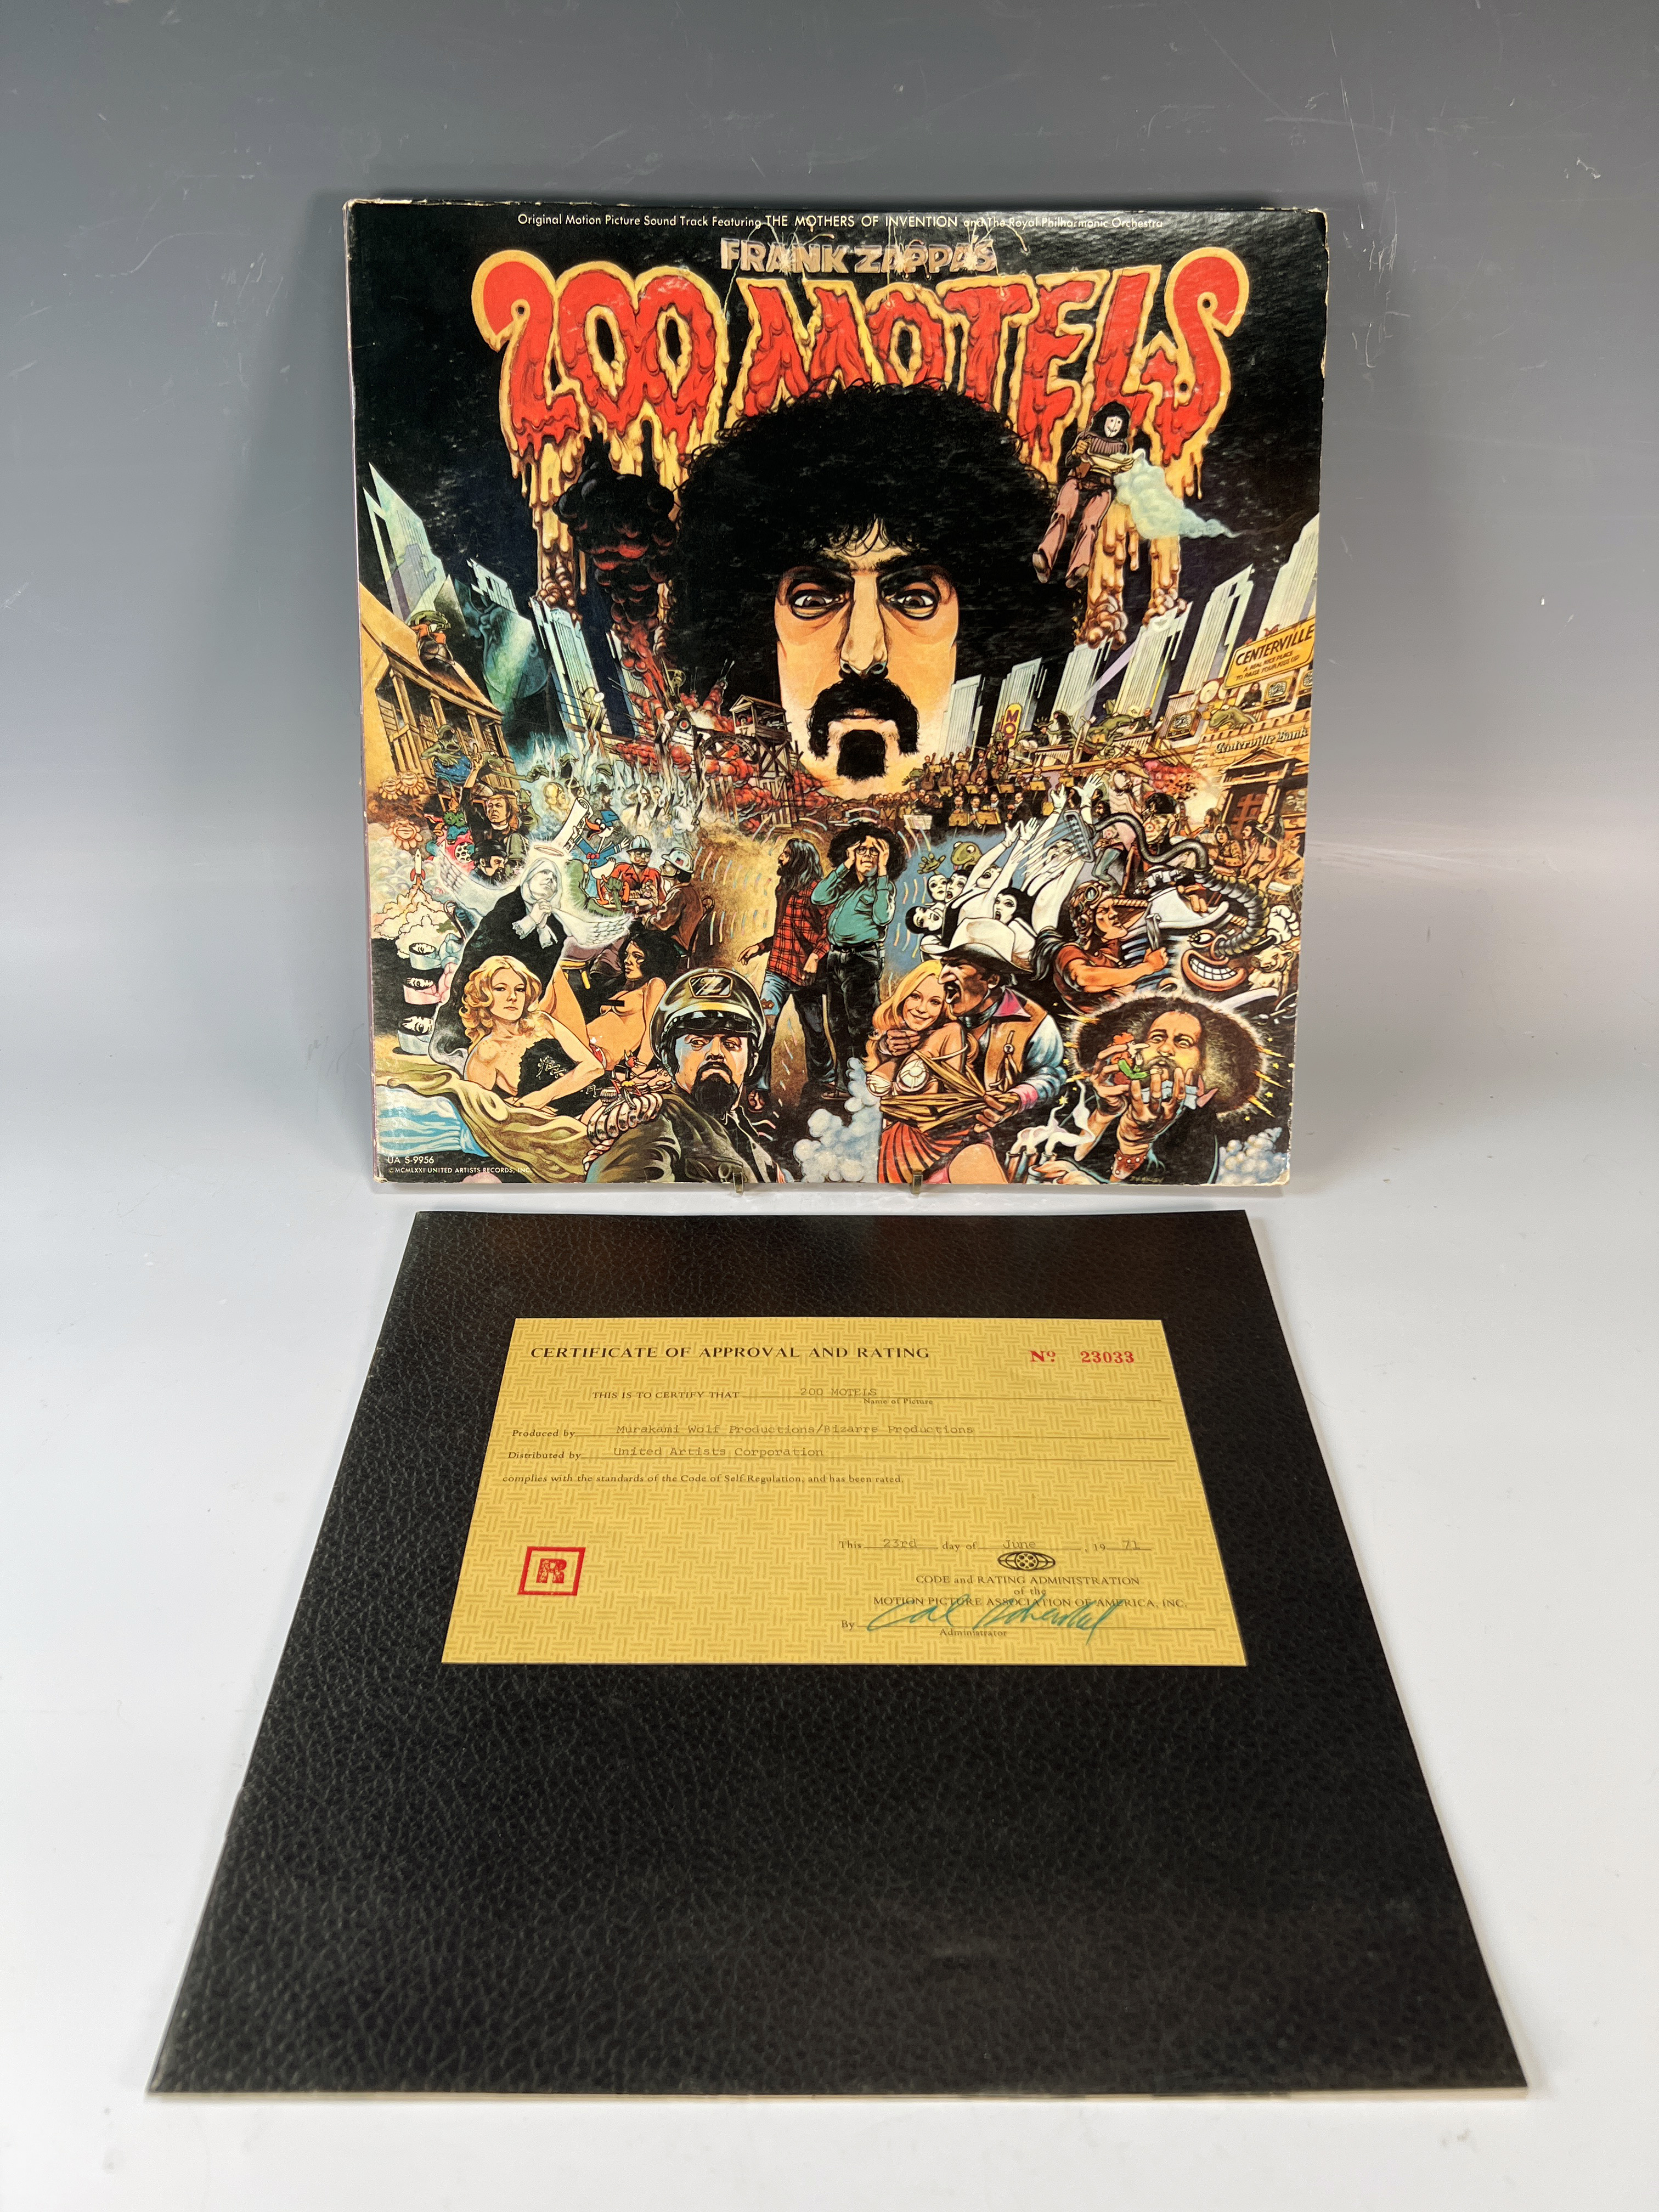 Frank Zappa 200 Motels Double Record Album image 1